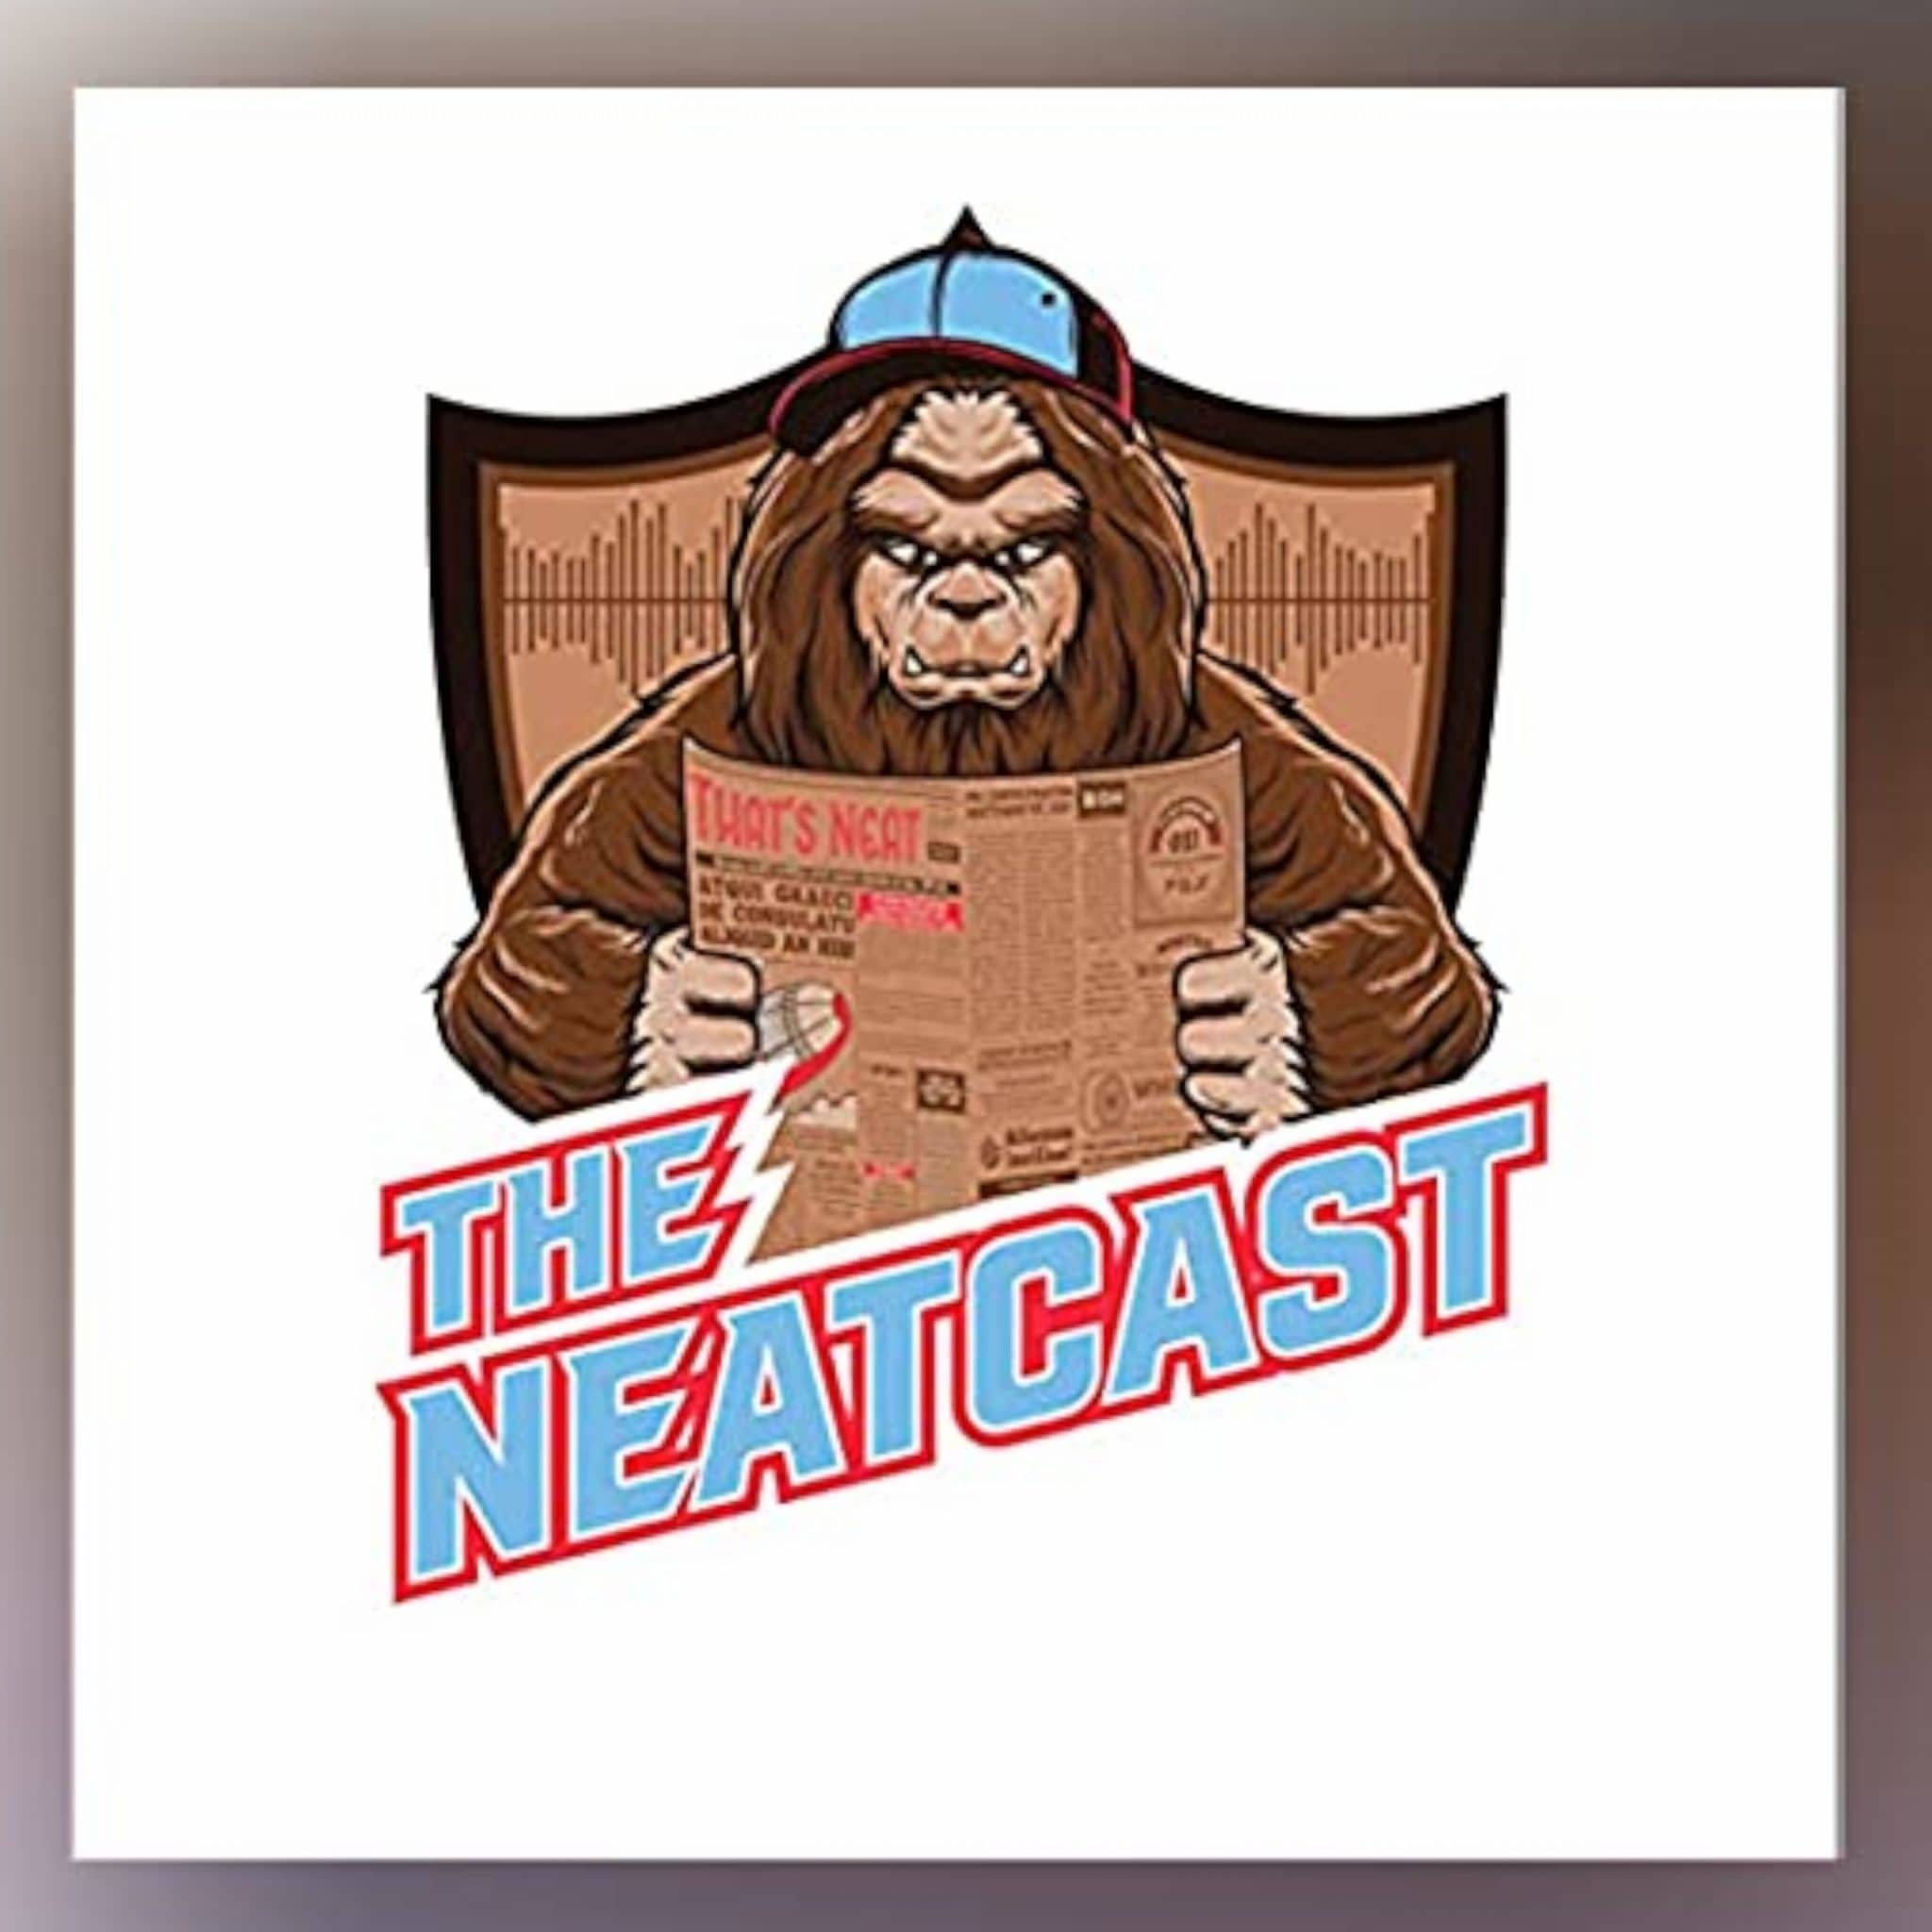 The NeatCast